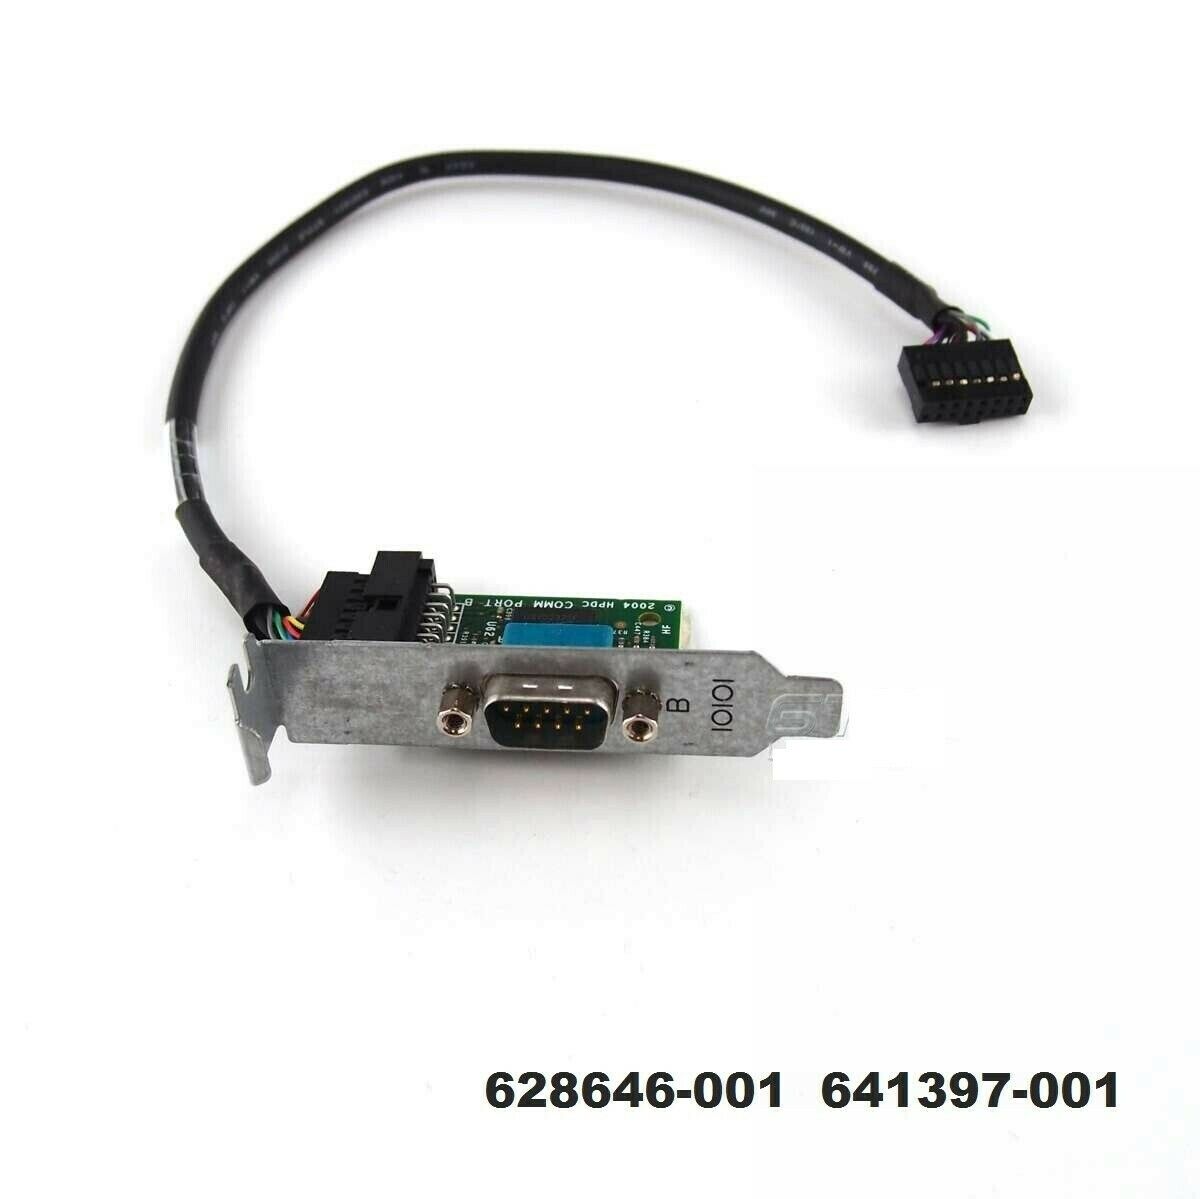 HP Serial Port Adapter mit Low-Profile-Kabel 628646-001 641397-001 012711-001